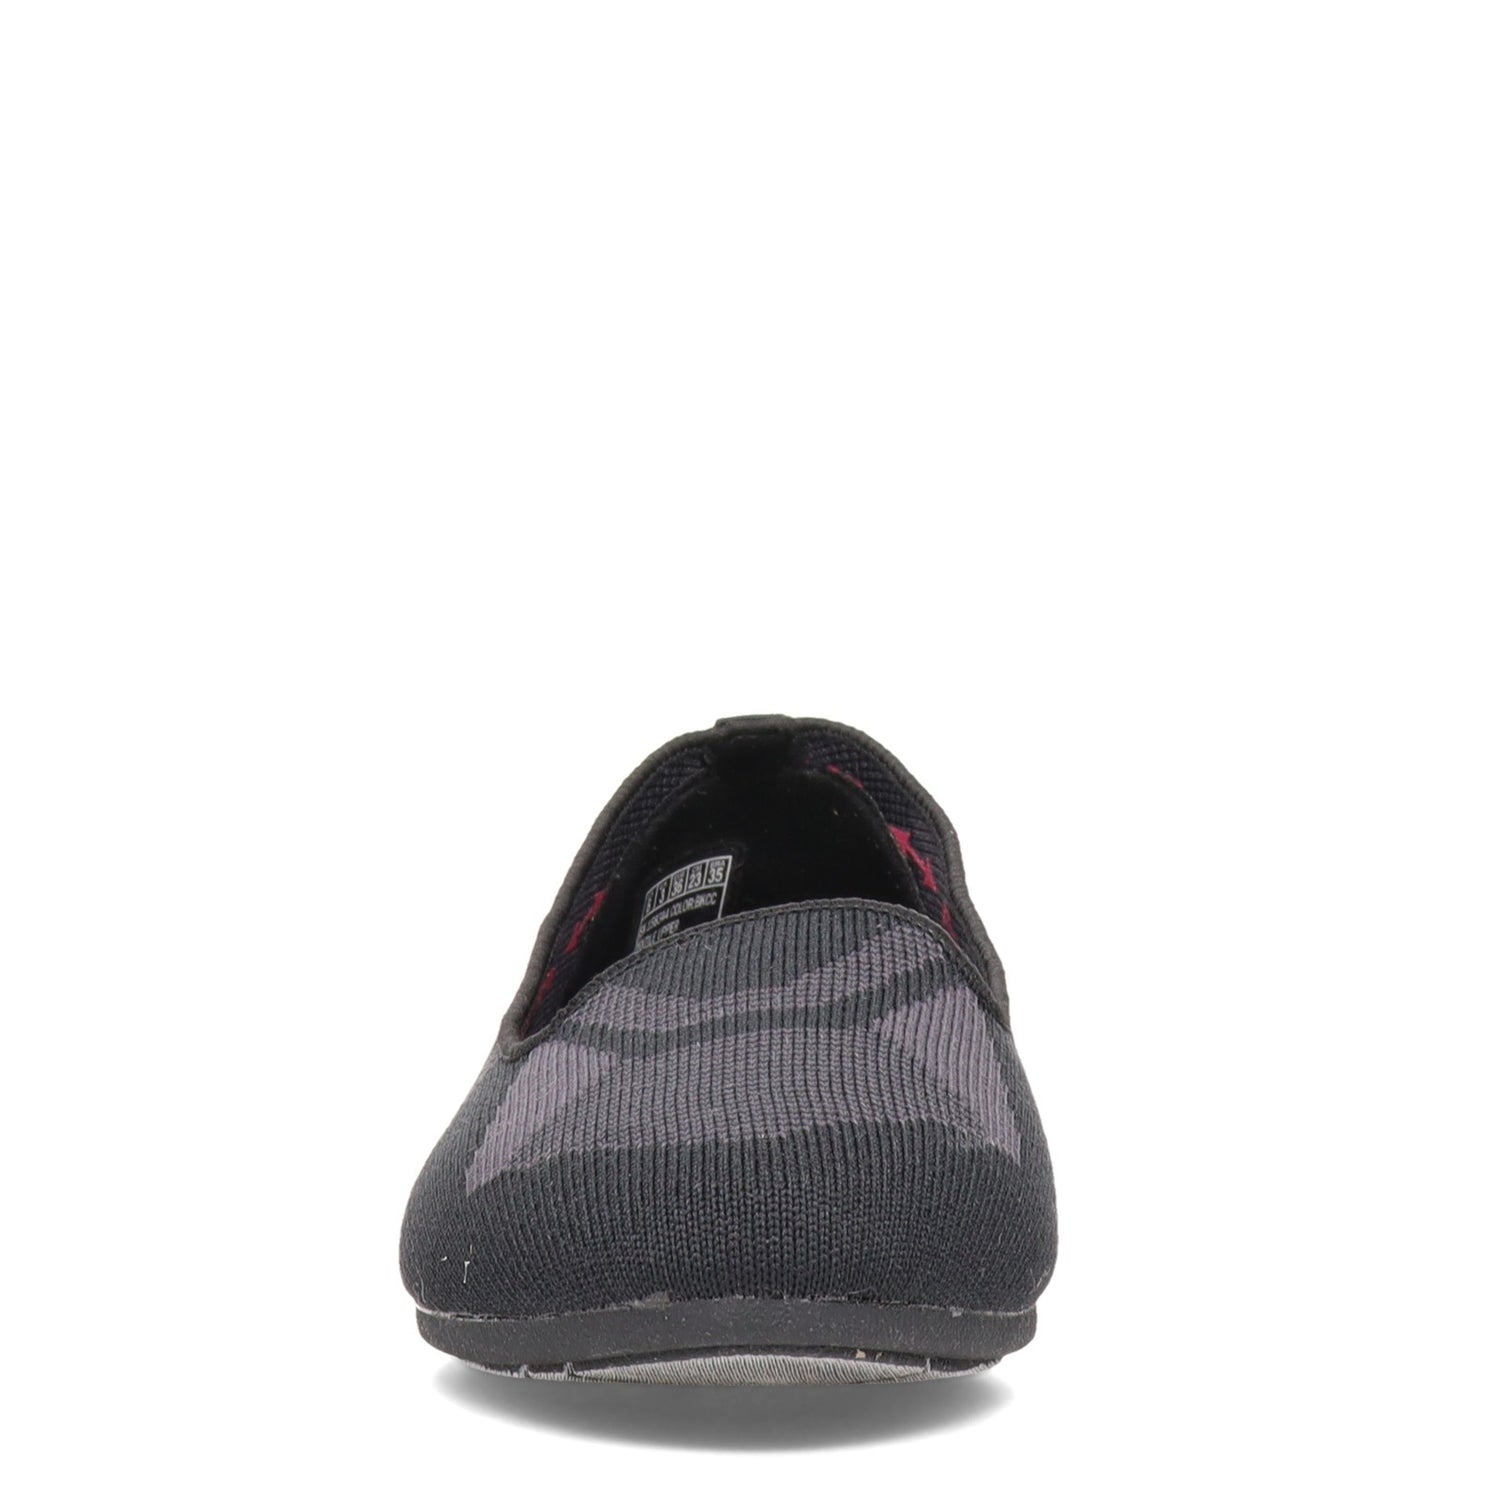 Peltz Shoes  Women's Skechers Cleo 2.0 - I'm Impressed Flat Black/Charcoal 158344-BKCC